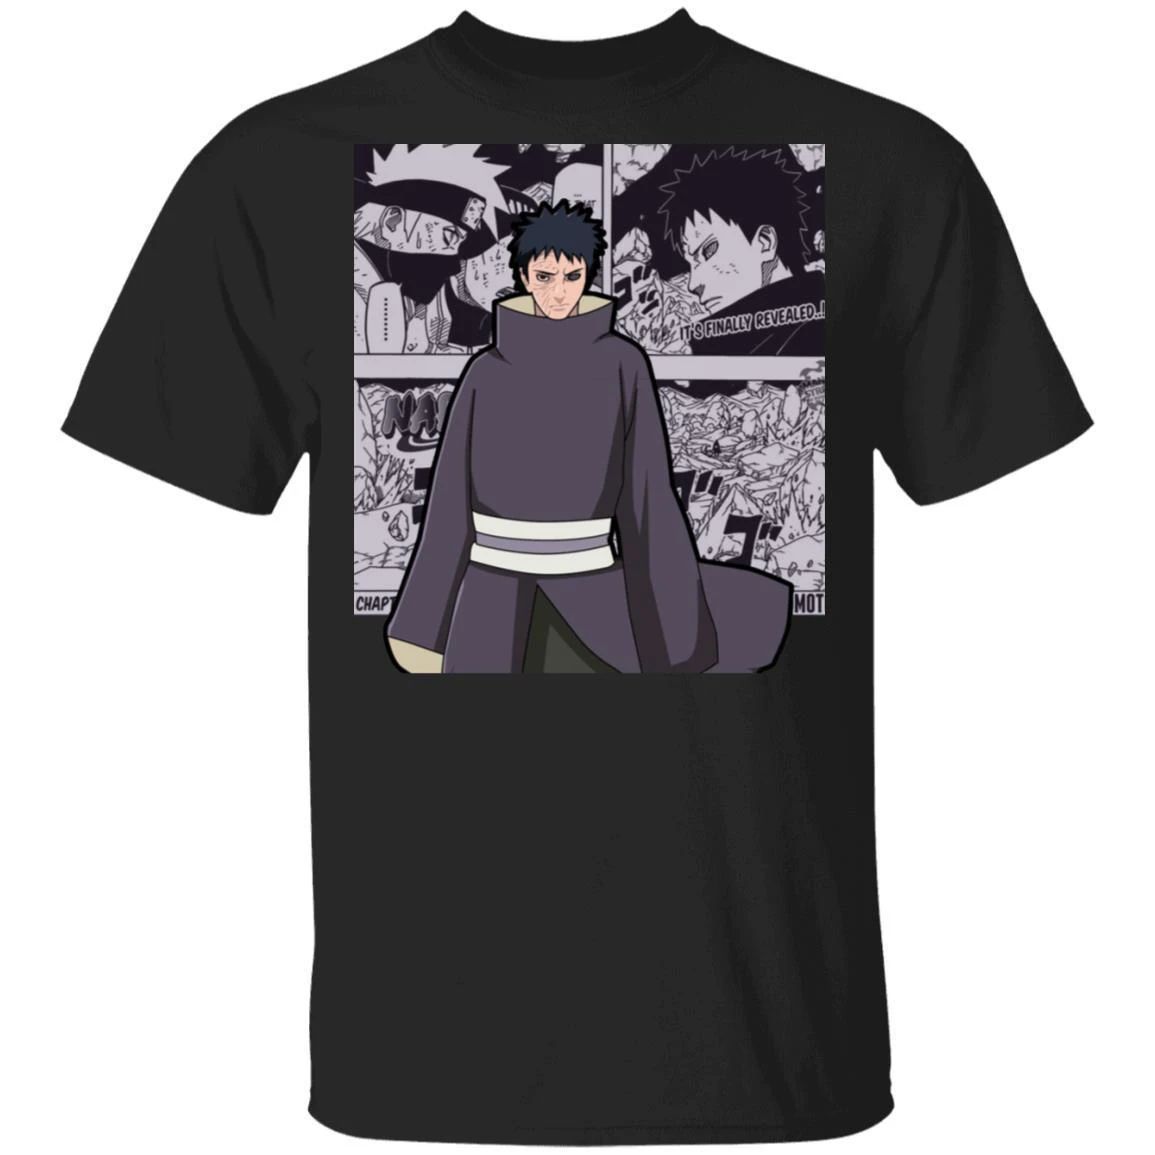 Naruto Obito Uchiha Shirt Anime Character Mix Manga Style Tee